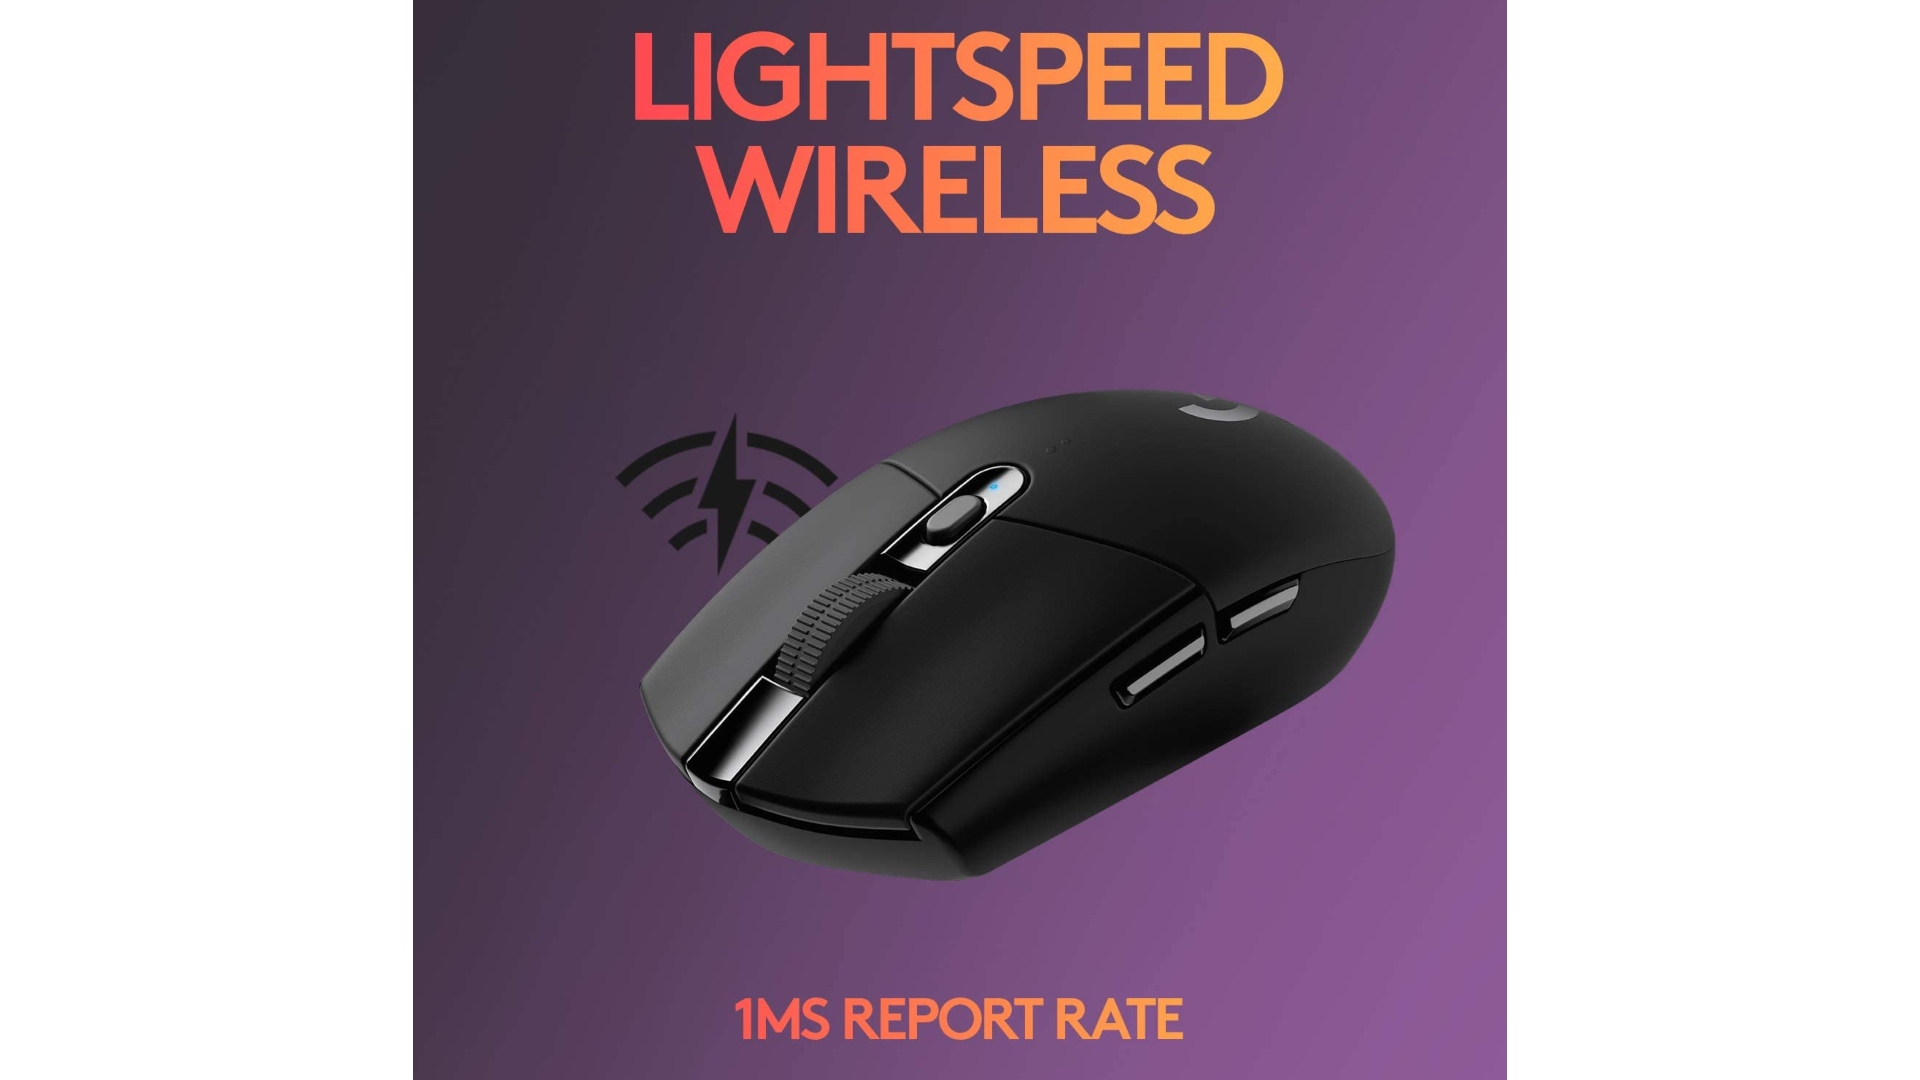 Logitech G305 Lightspeed Wireless Gaming Mouse - Mint - us